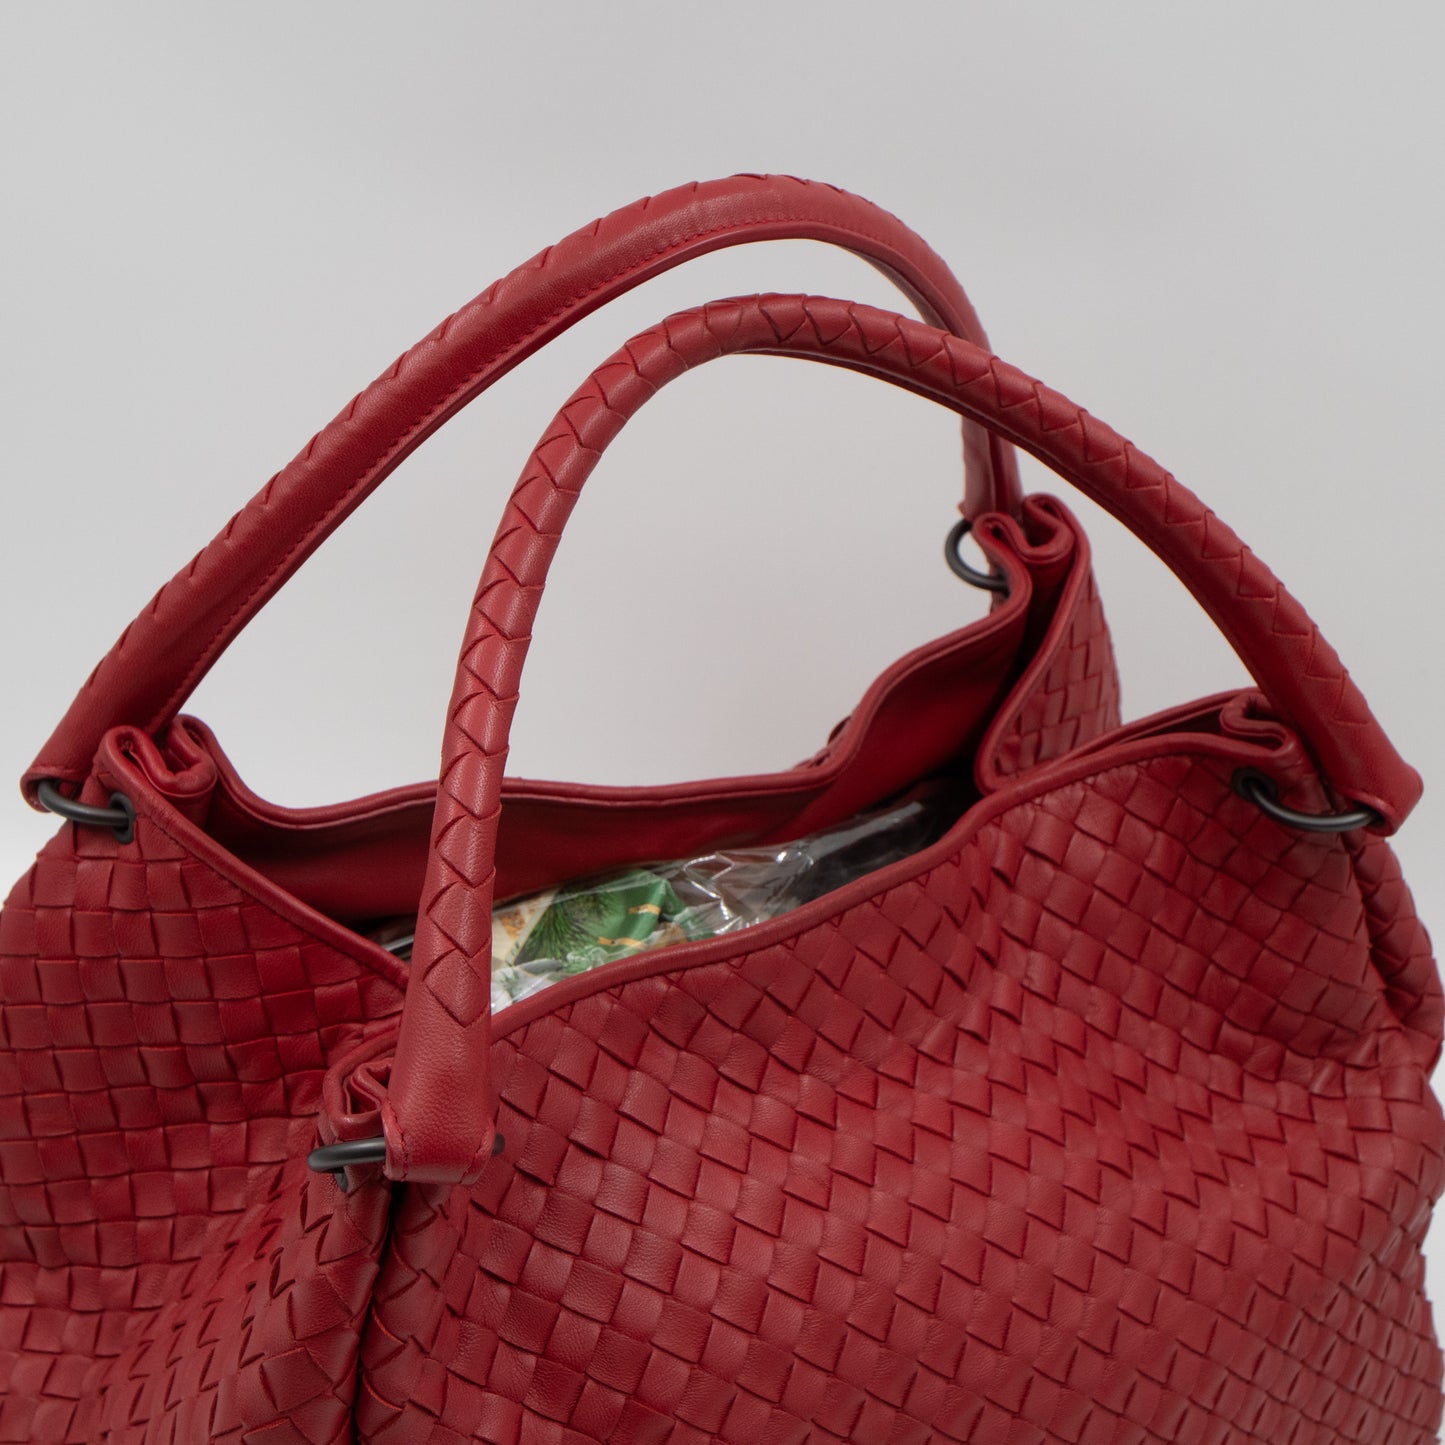 Parachute Bag Intrecciato Red Leather